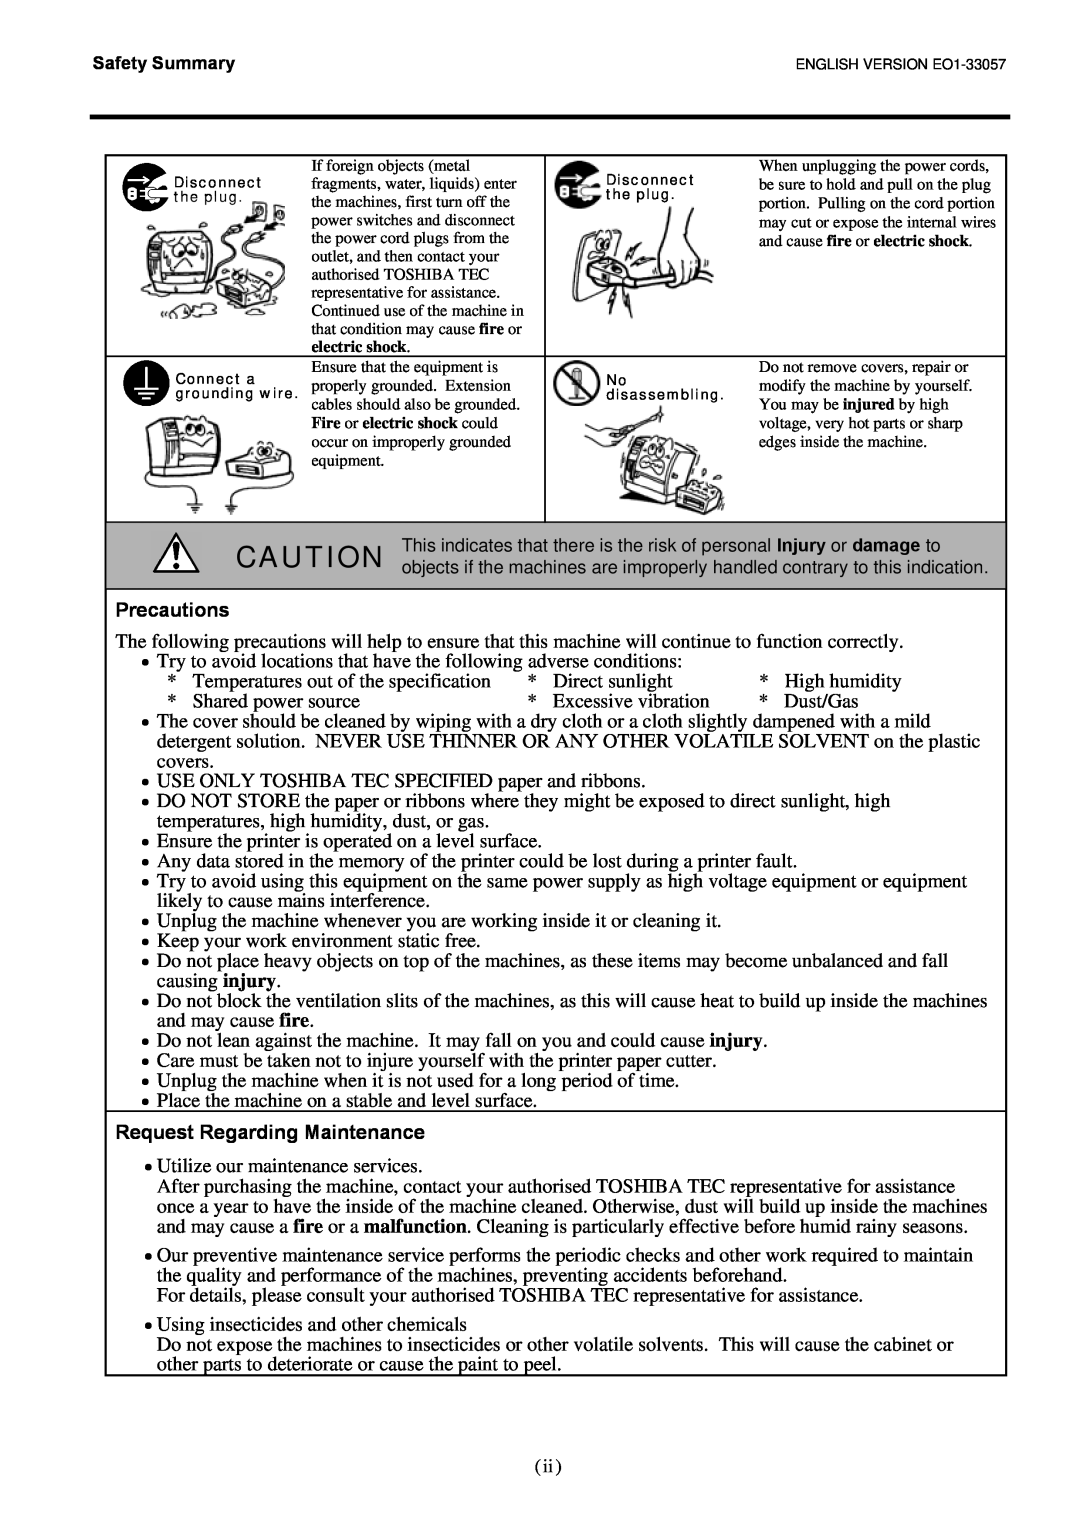 Toshiba B-SX8T SERIES, EO1-33057D owner manual Precautions, Request Regarding Maintenance 